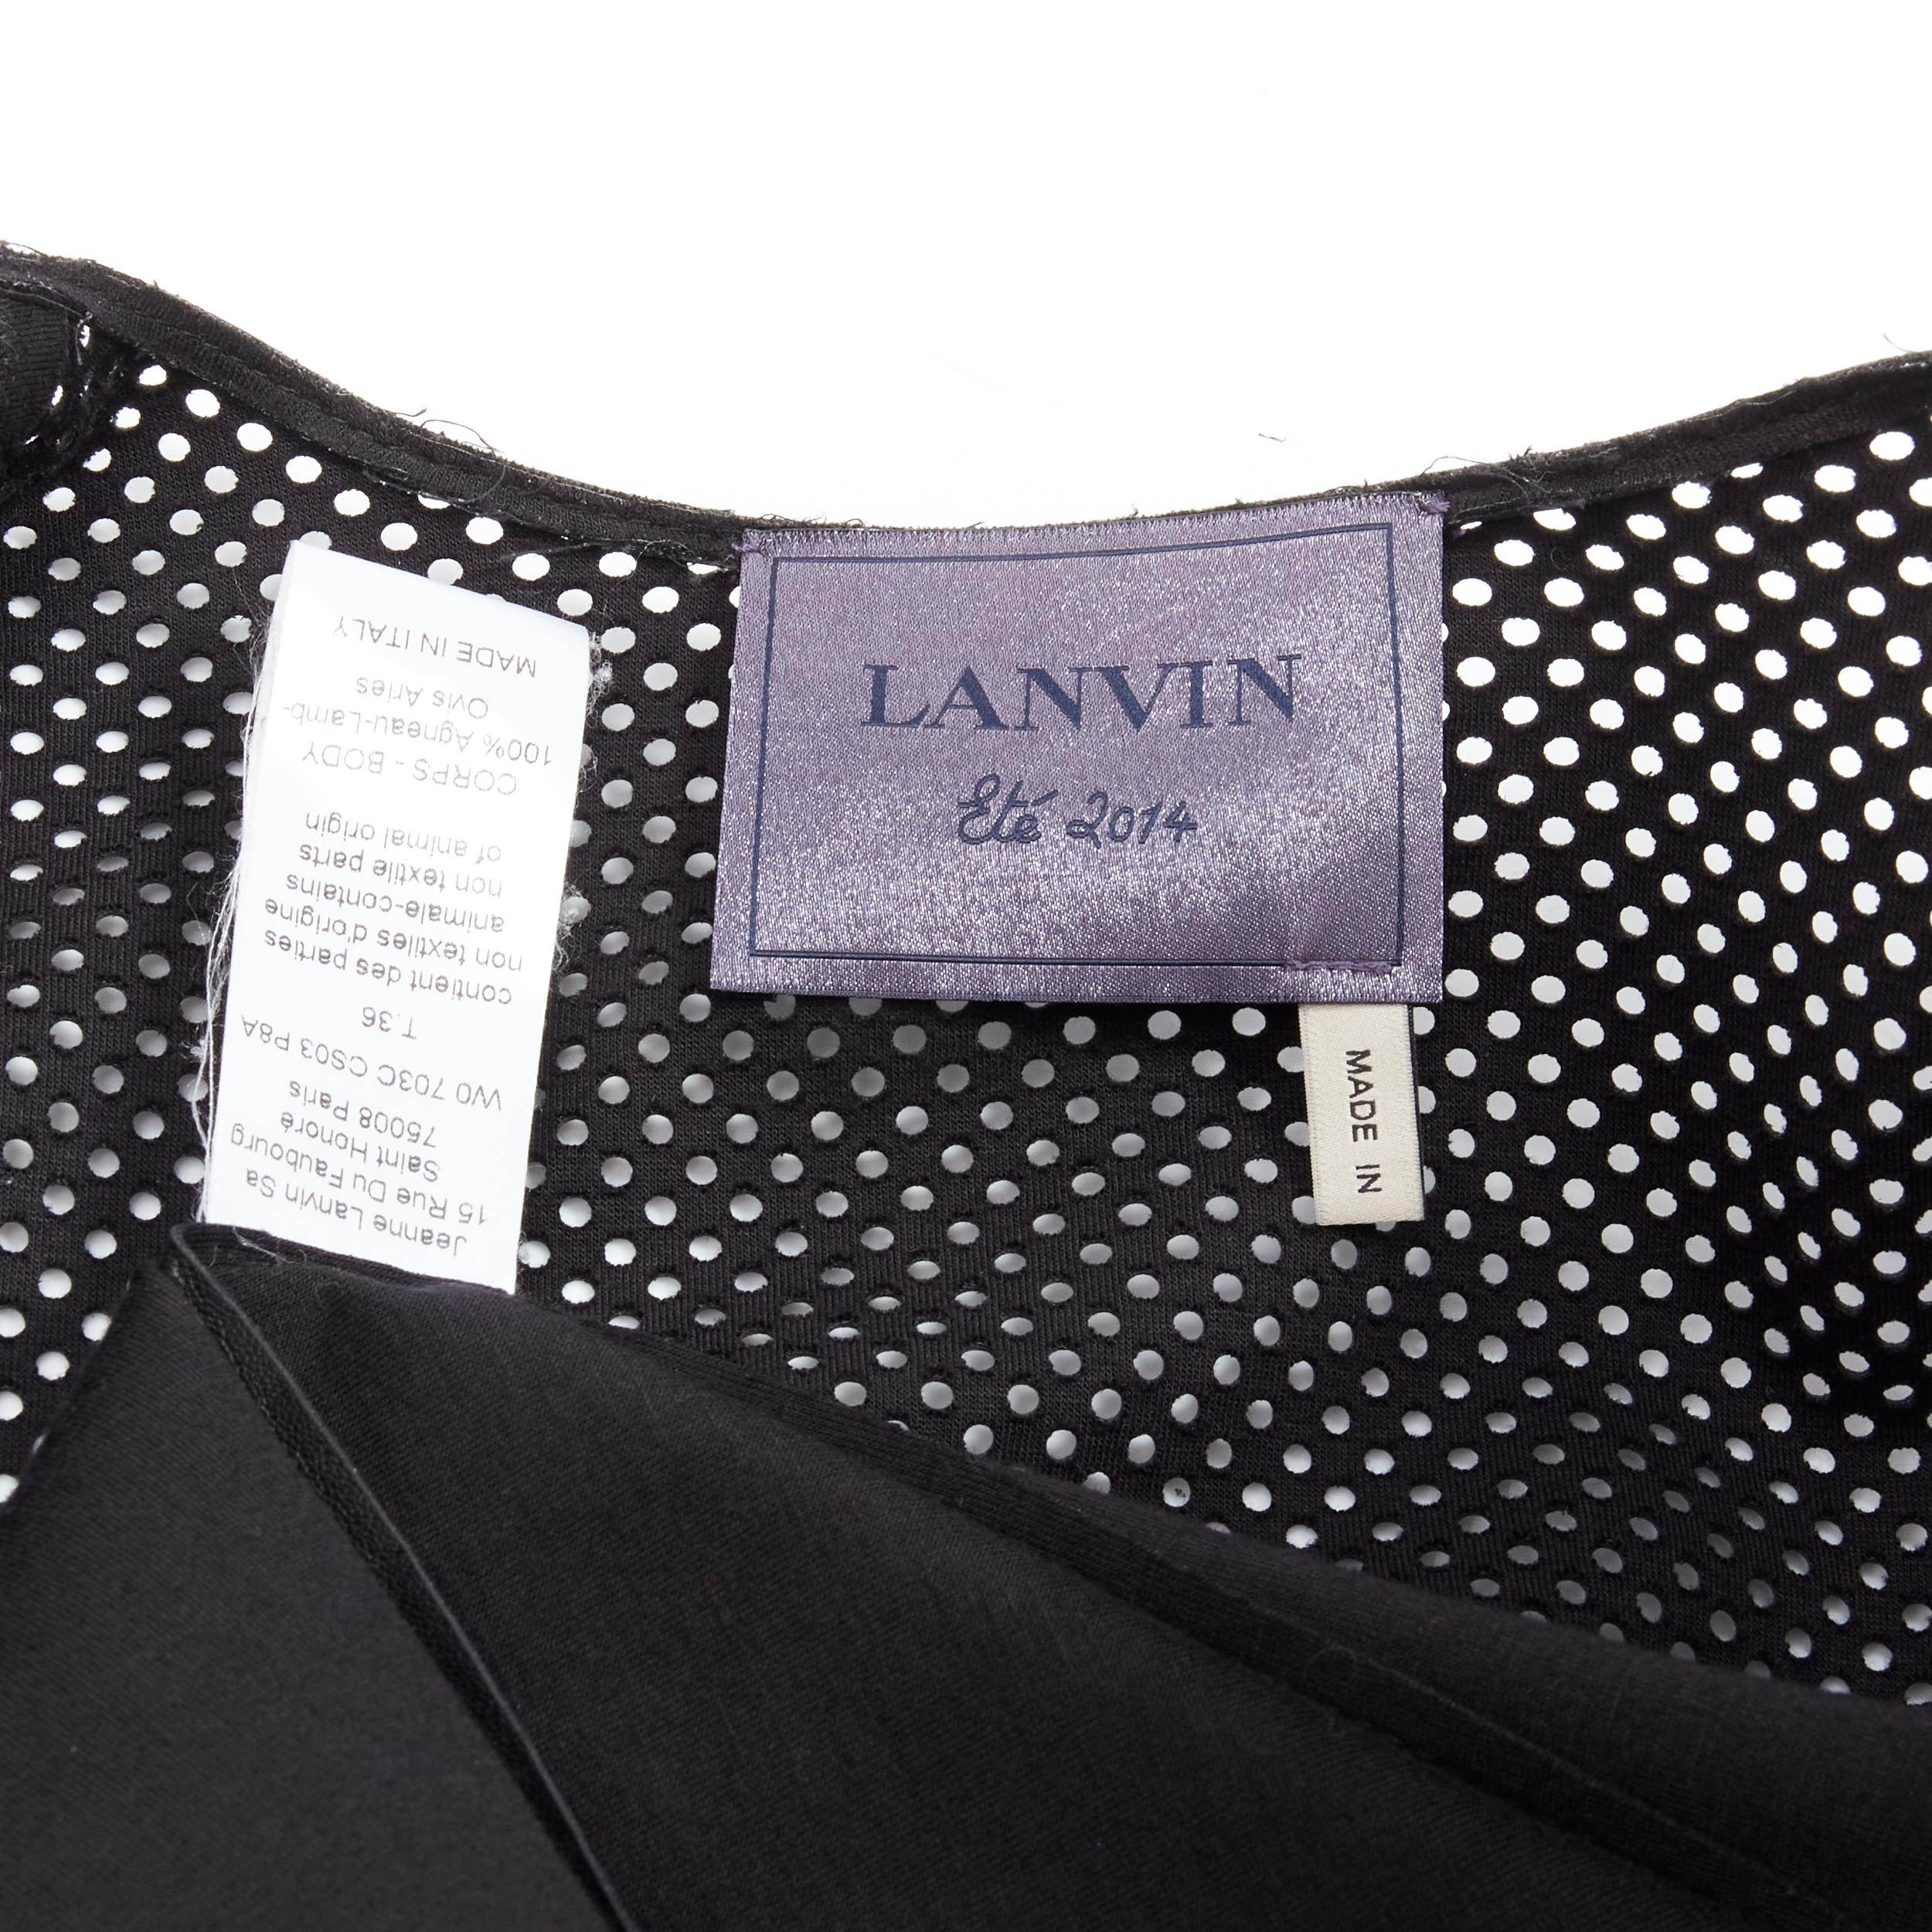 LANVIN 2014 Alber Elbaz black lambskin leather perforated 4 pocket jacket FR36 S 6